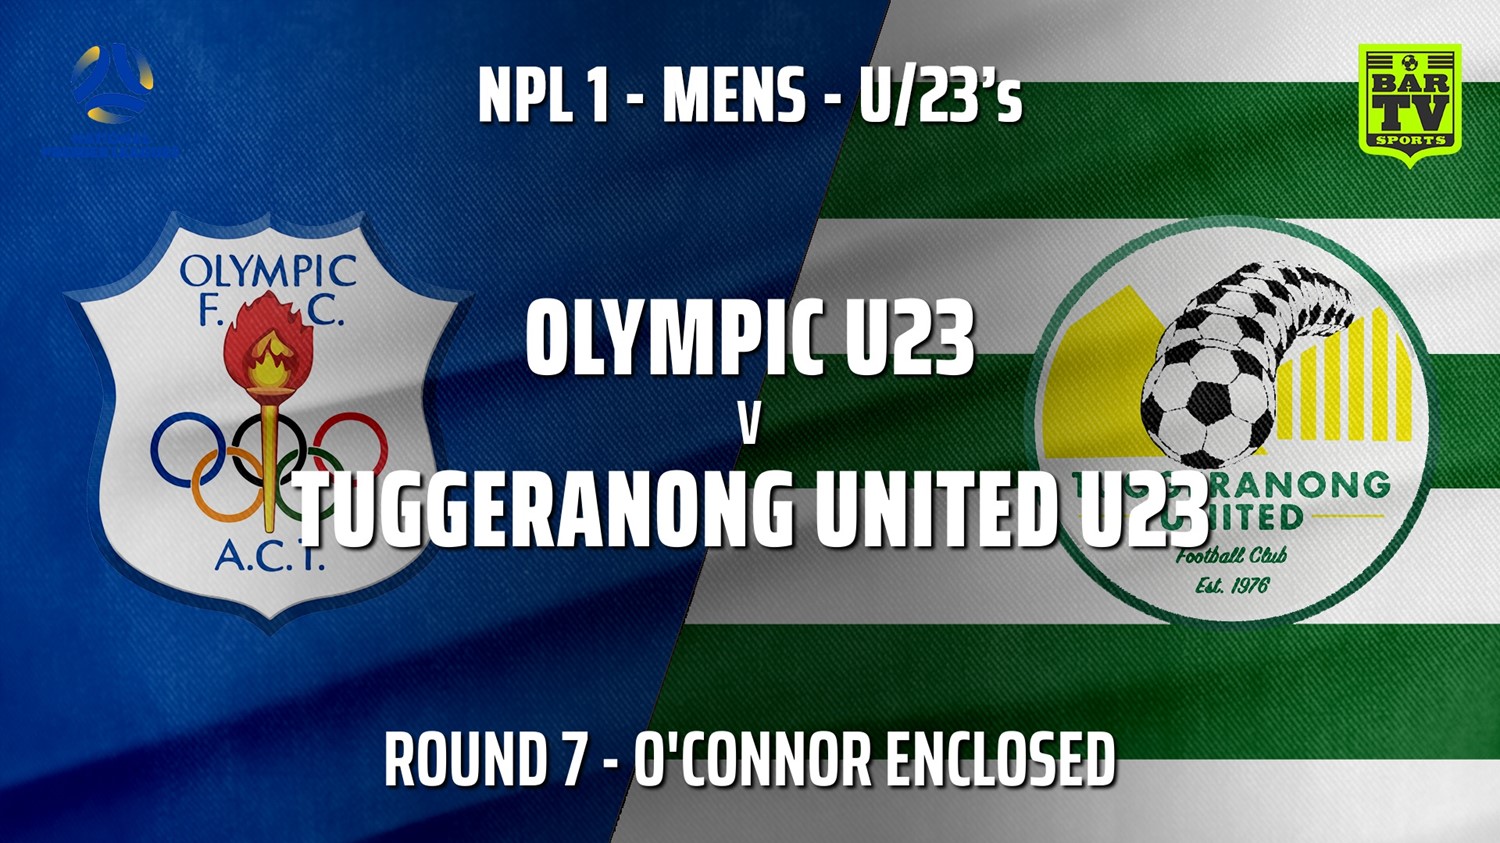 210522-NPL1 U23 Capital Round 7 - Canberra Olympic U23 v Tuggeranong United U23 Minigame Slate Image